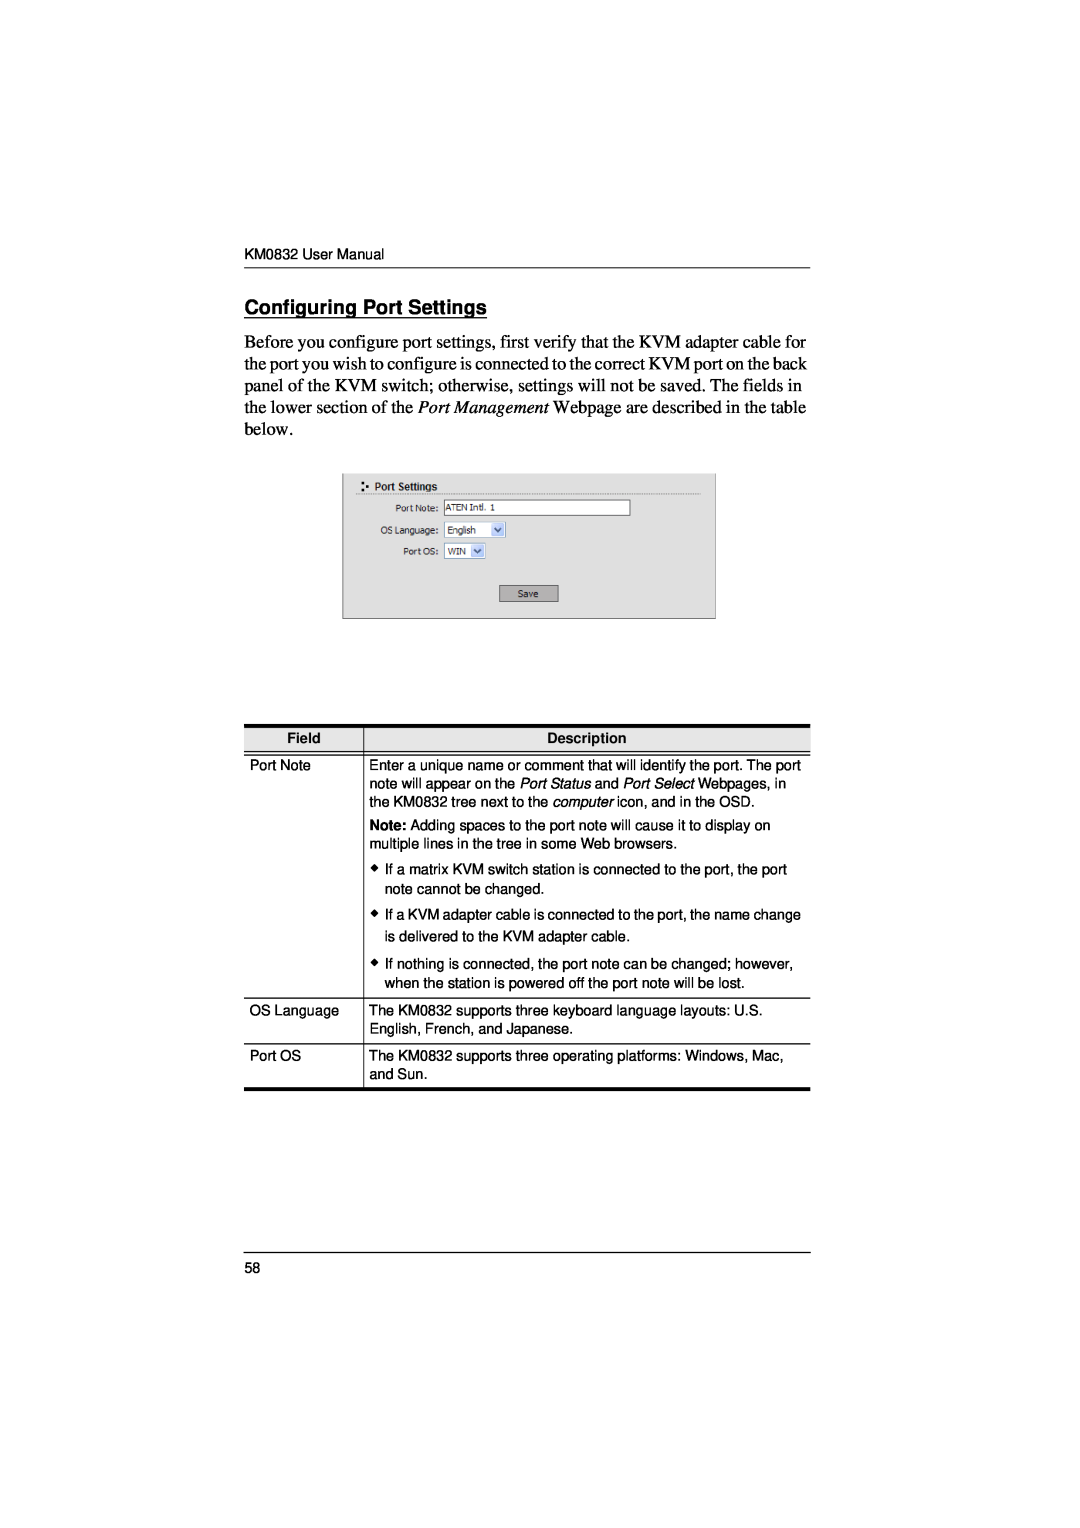 ATEN Technology KM0832 user manual Configuring Port Settings, Field, Description 